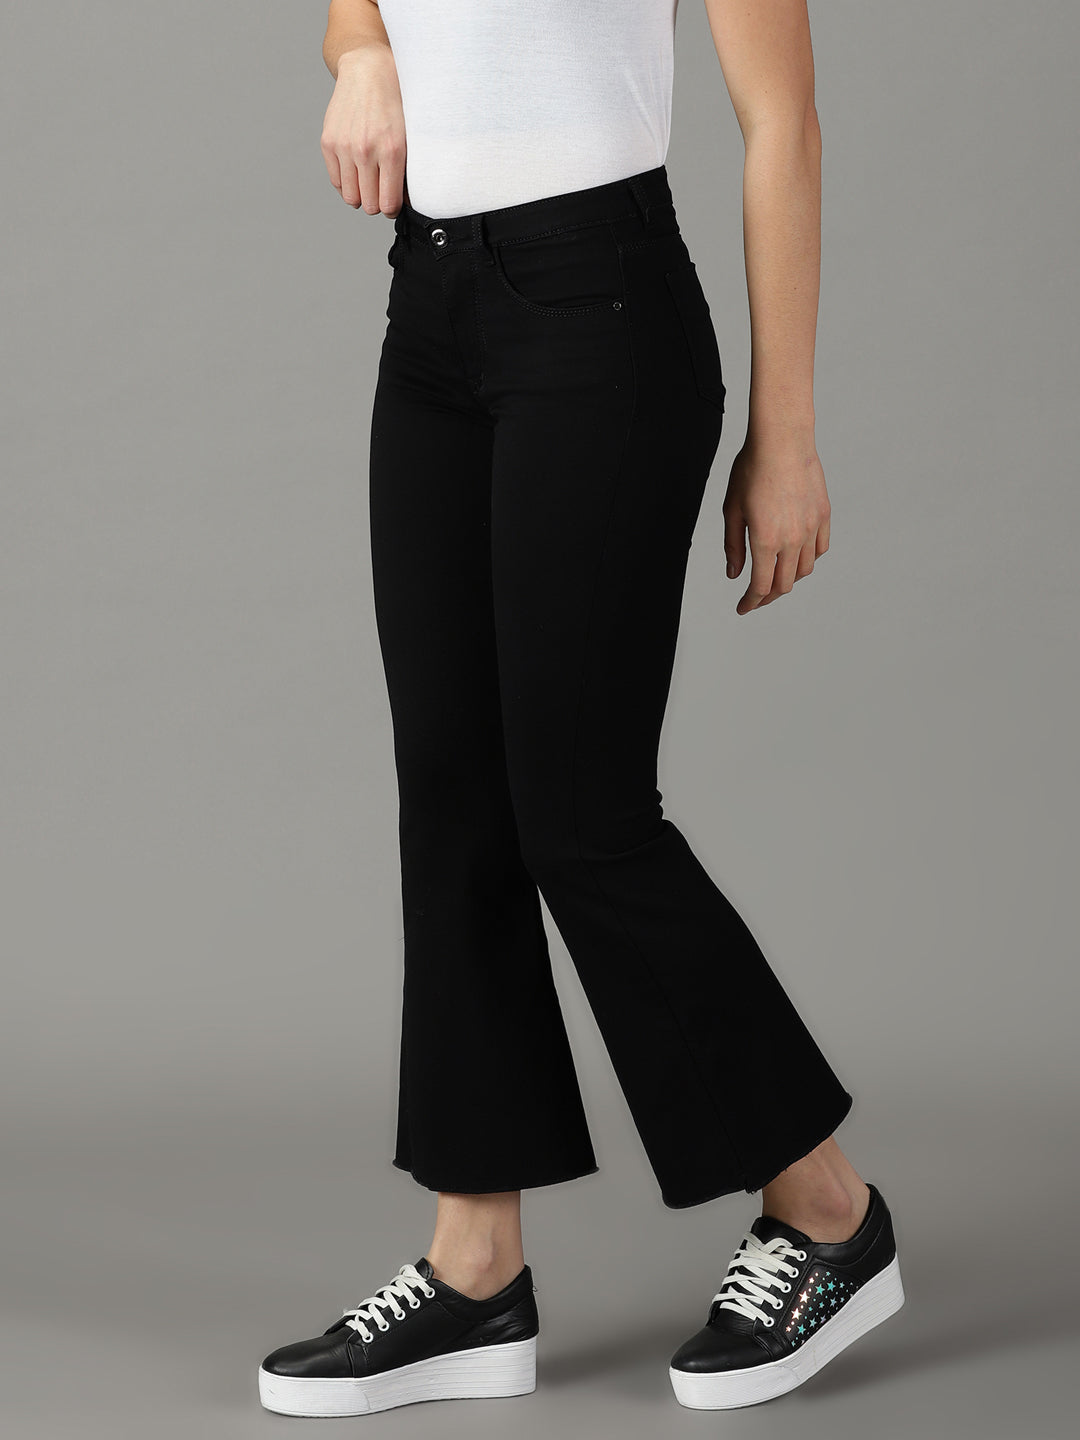 Women's Black Solid Bootcut Denim Jeans